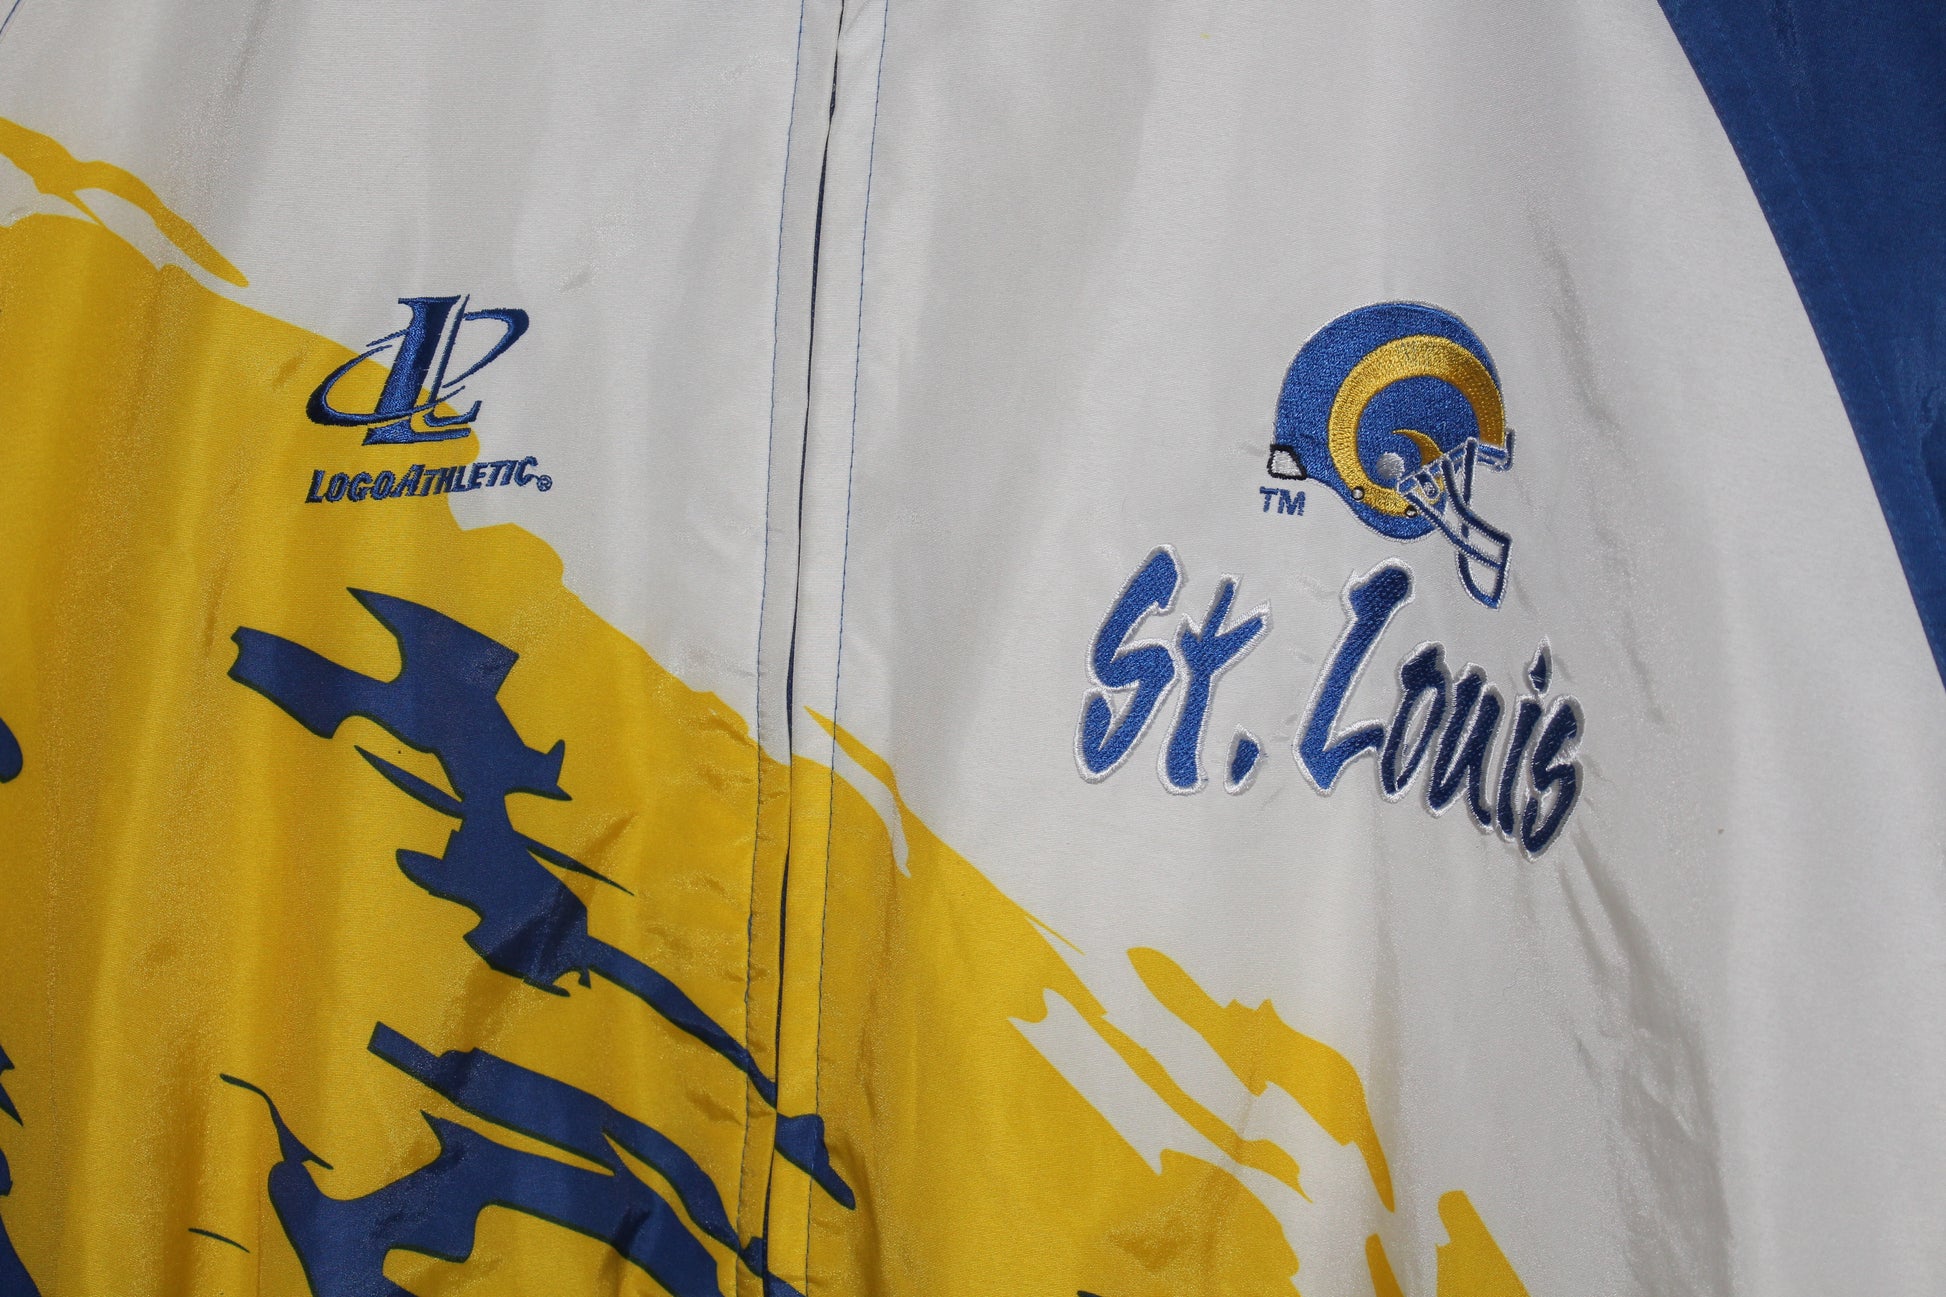 Vintage St. Louis Rams Logo Athletic Jacket Size Medium